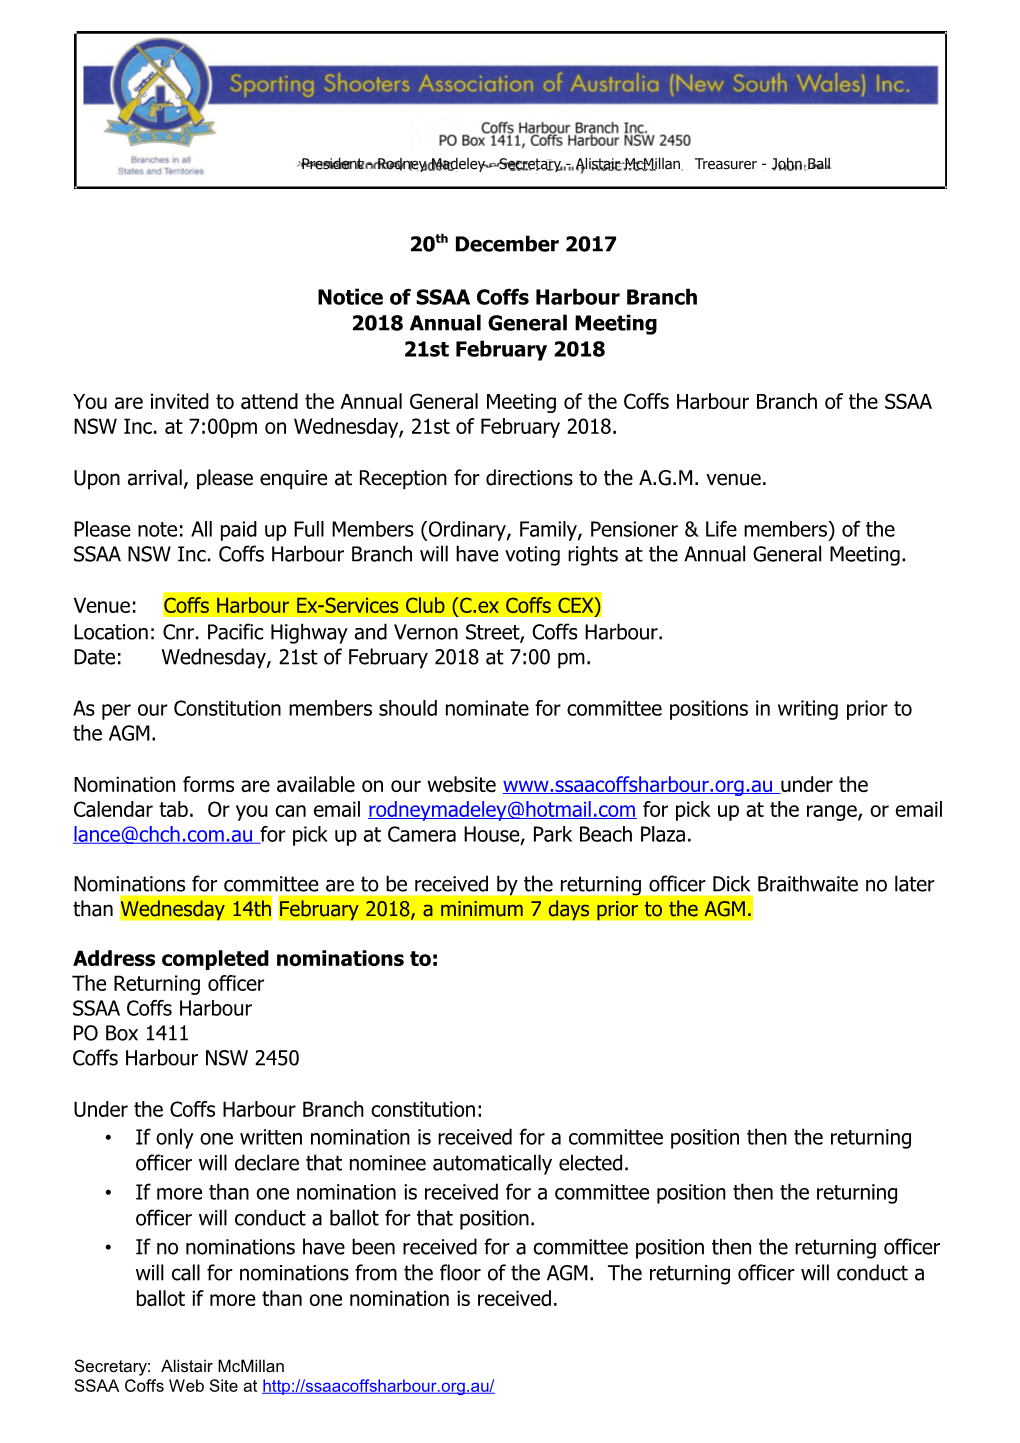 Notice of SSAA Coffs Harbour Branch